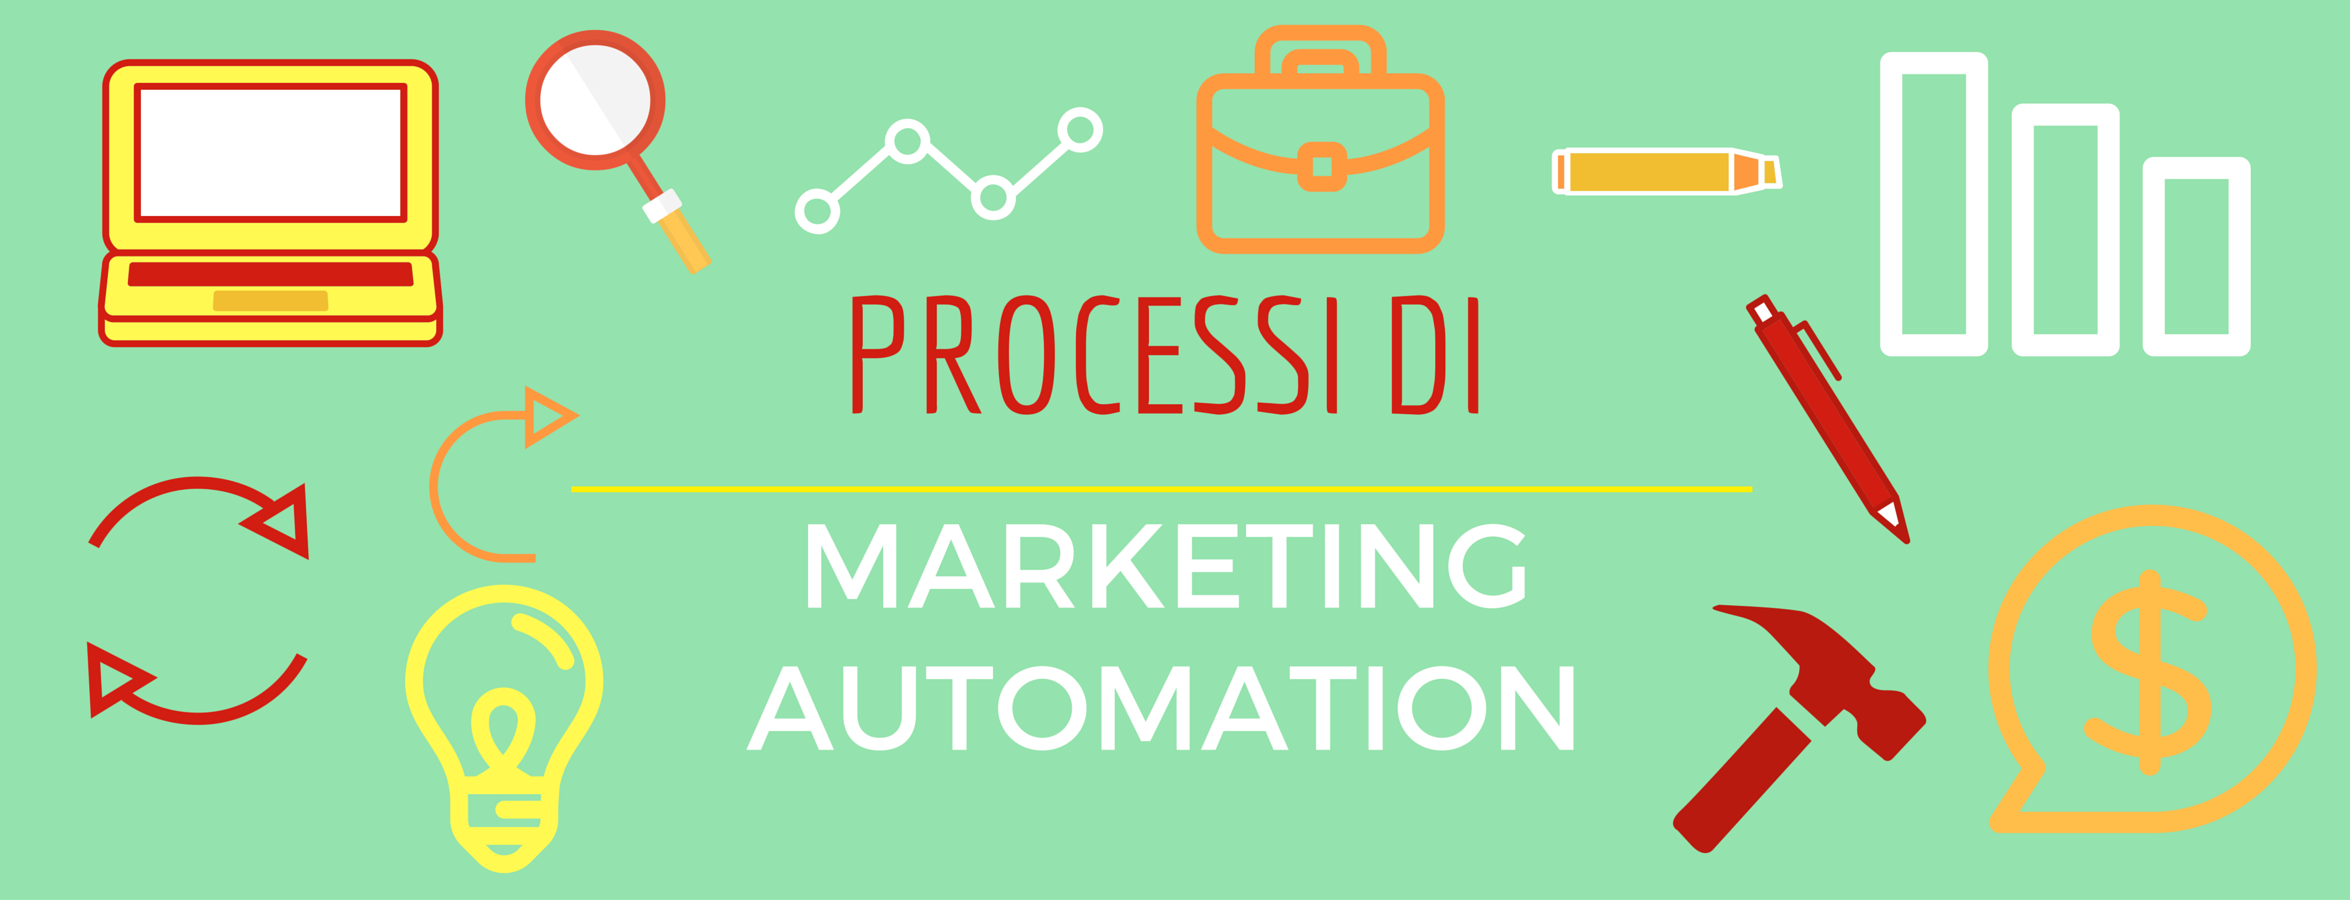 processi-di-marketing-automation.png